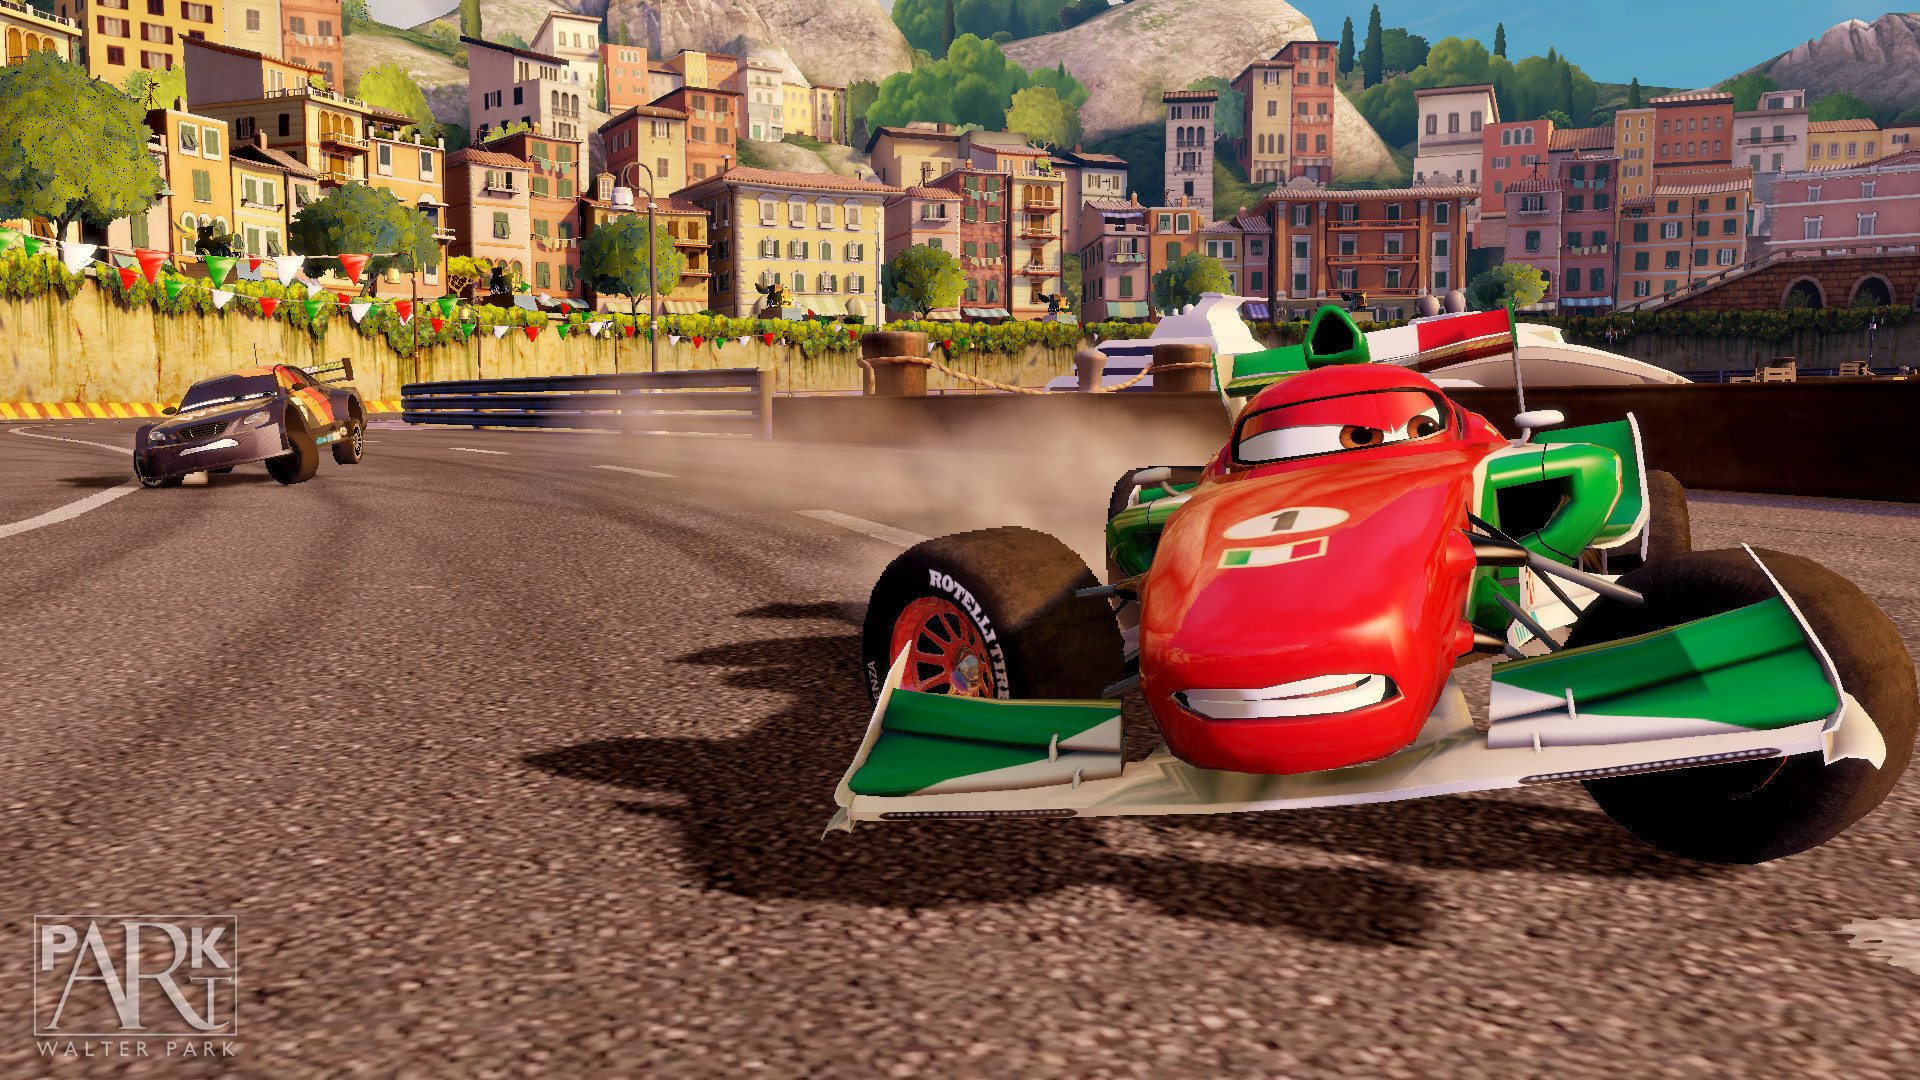 Cars 2 play. Cars 2 Xbox 360. Тачки / cars: the videogame. Молния Маквин Xbox 360. Cars 2 the videogame Xbox 360.